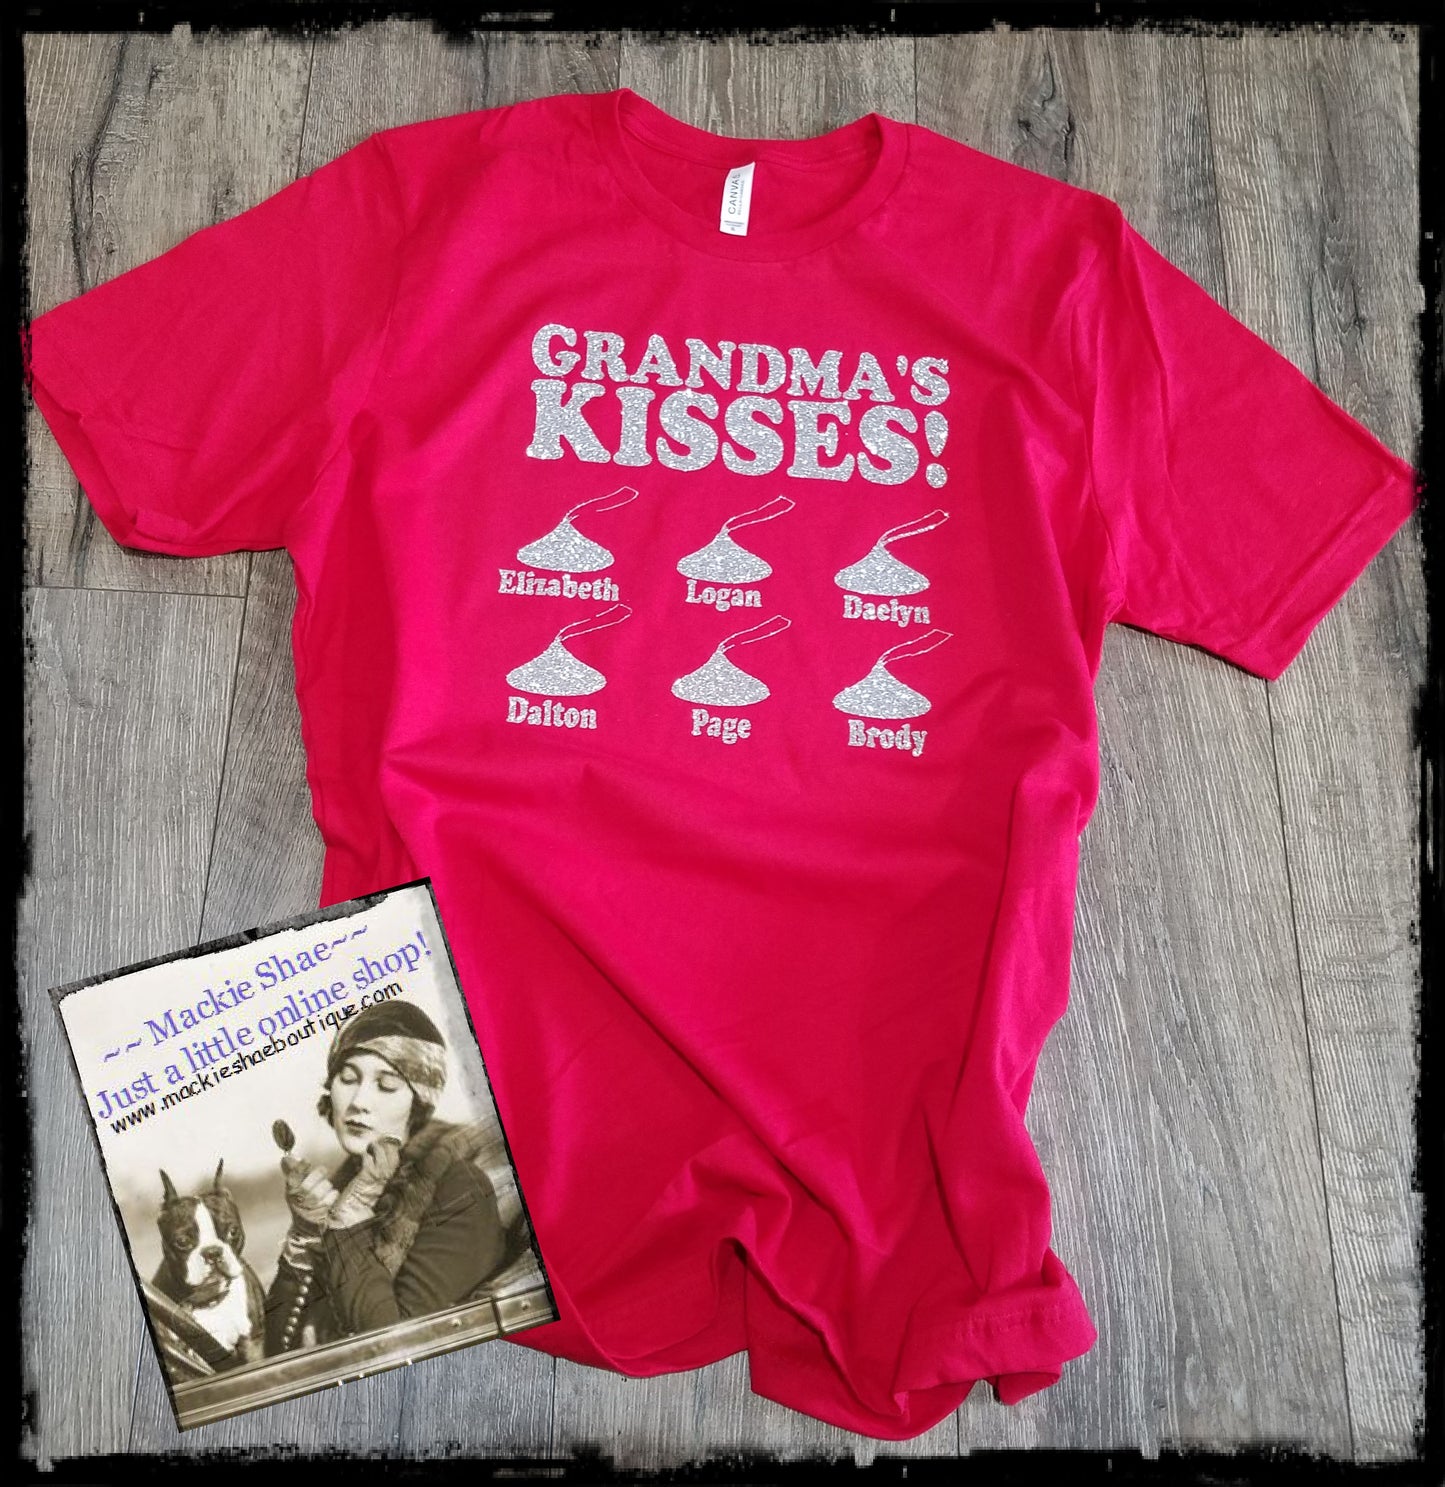 Grandma's Kisses! Personalized Custom Shirt (Meemaw, Granny, Etc), Short Sleeve